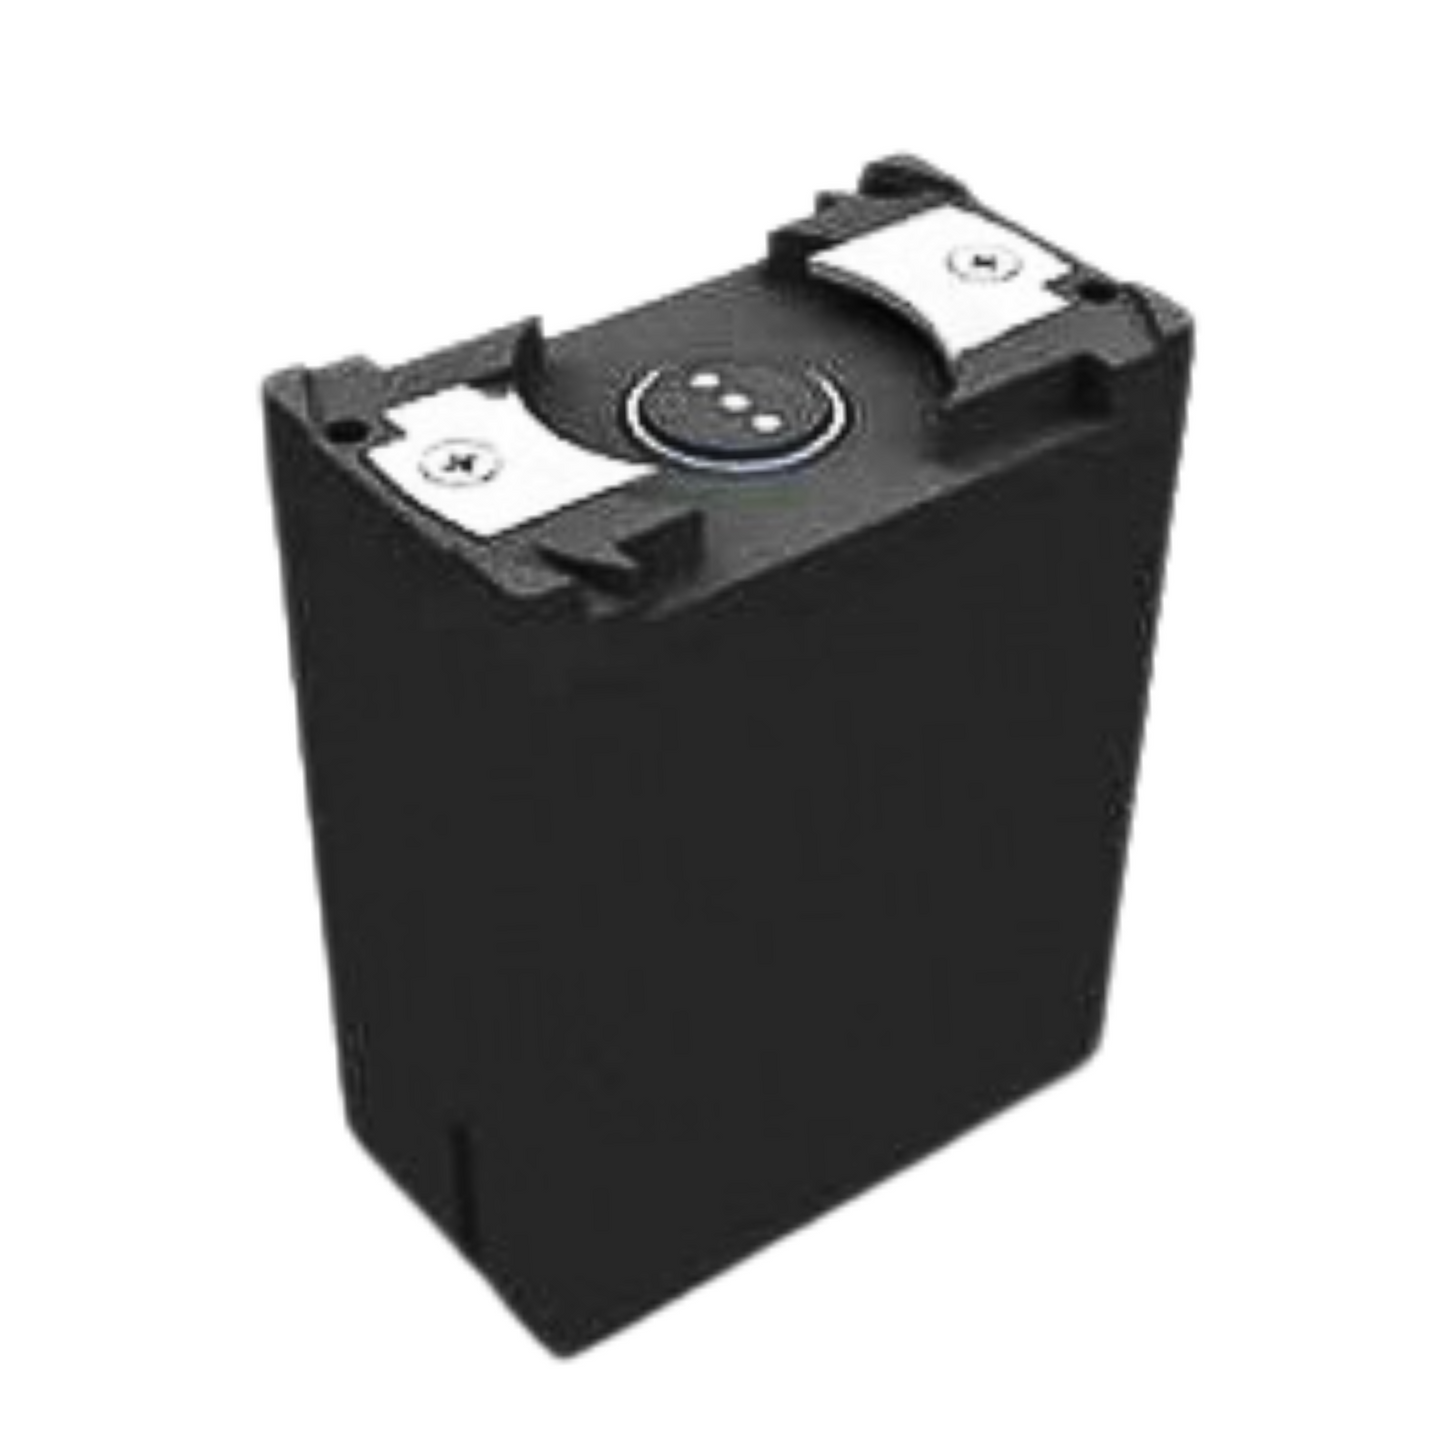 MBITR Battery - Lithium Ion Twist Lock Battery